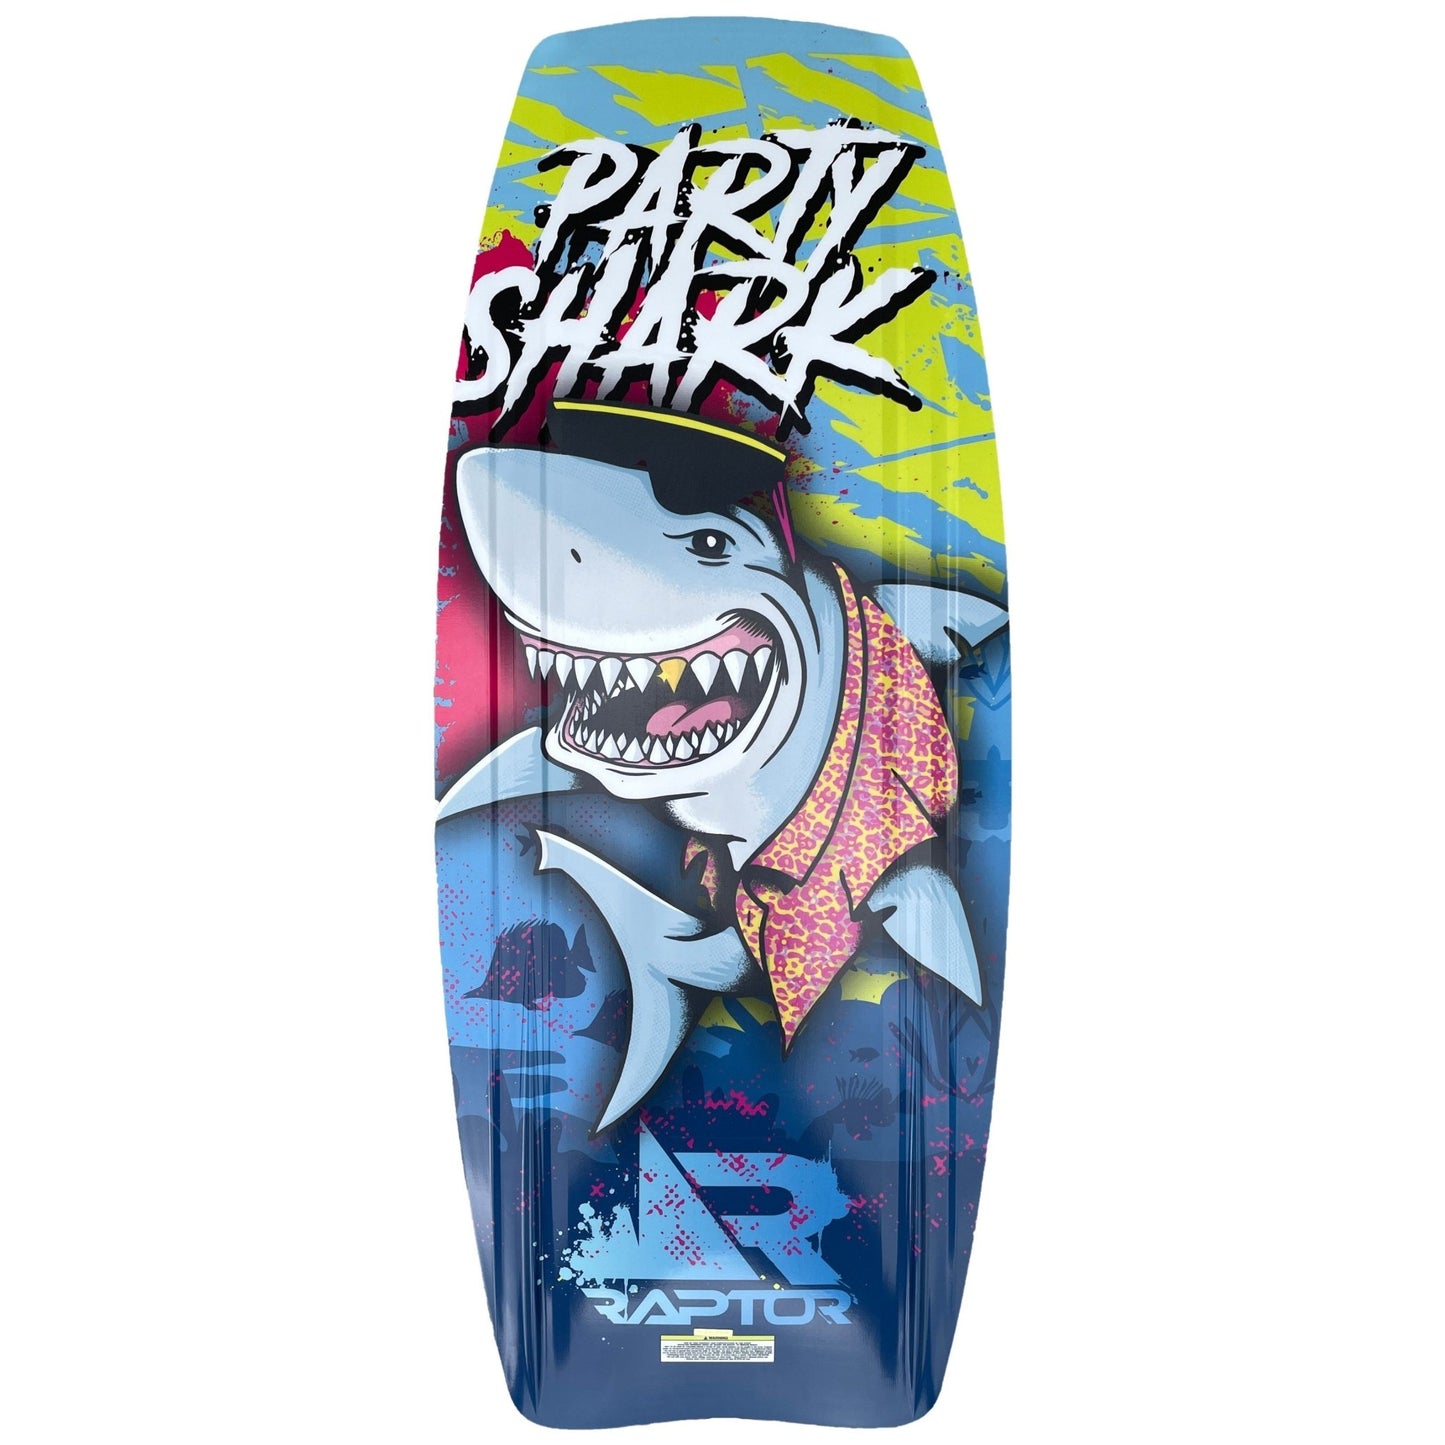 Party Shark Kneeboard -RaptorRP2090-BLUE-